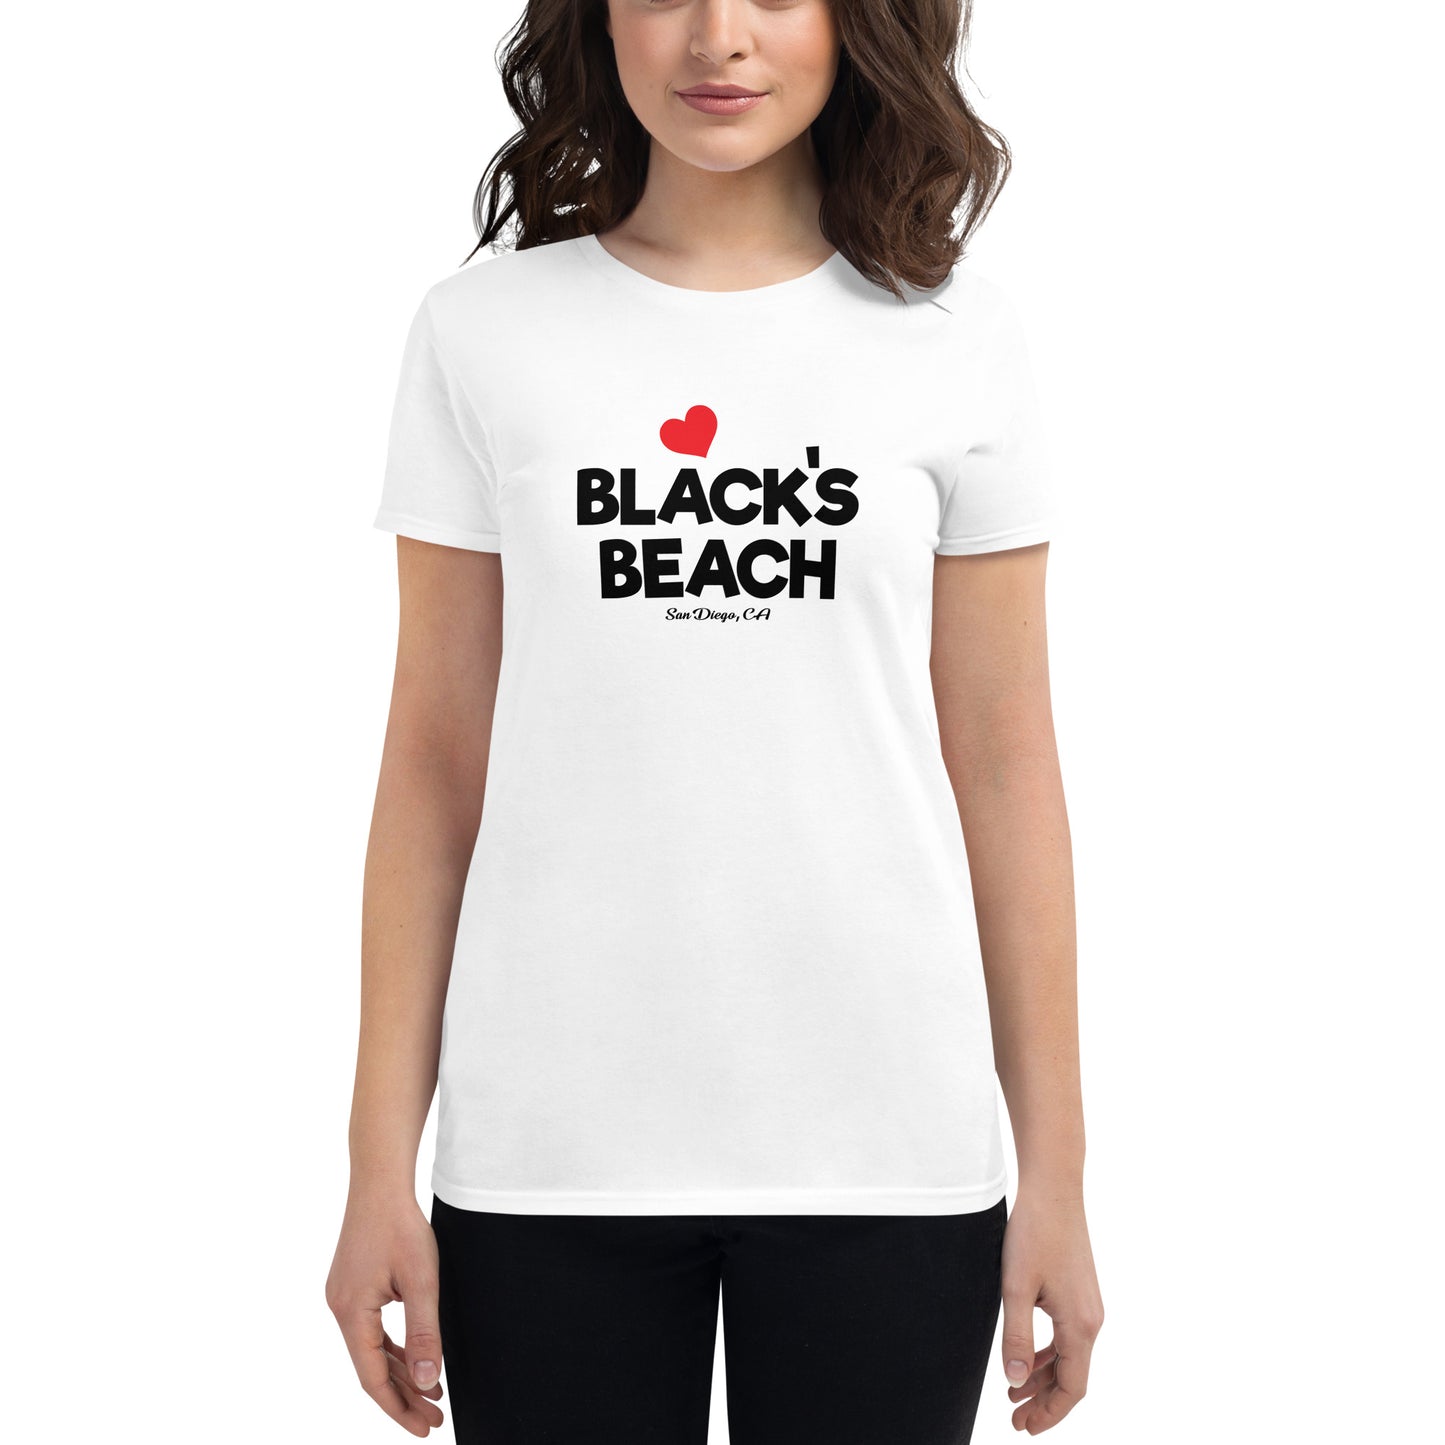 Black's Beach Tees / Style 02 / Women's short sleeve t-shirt